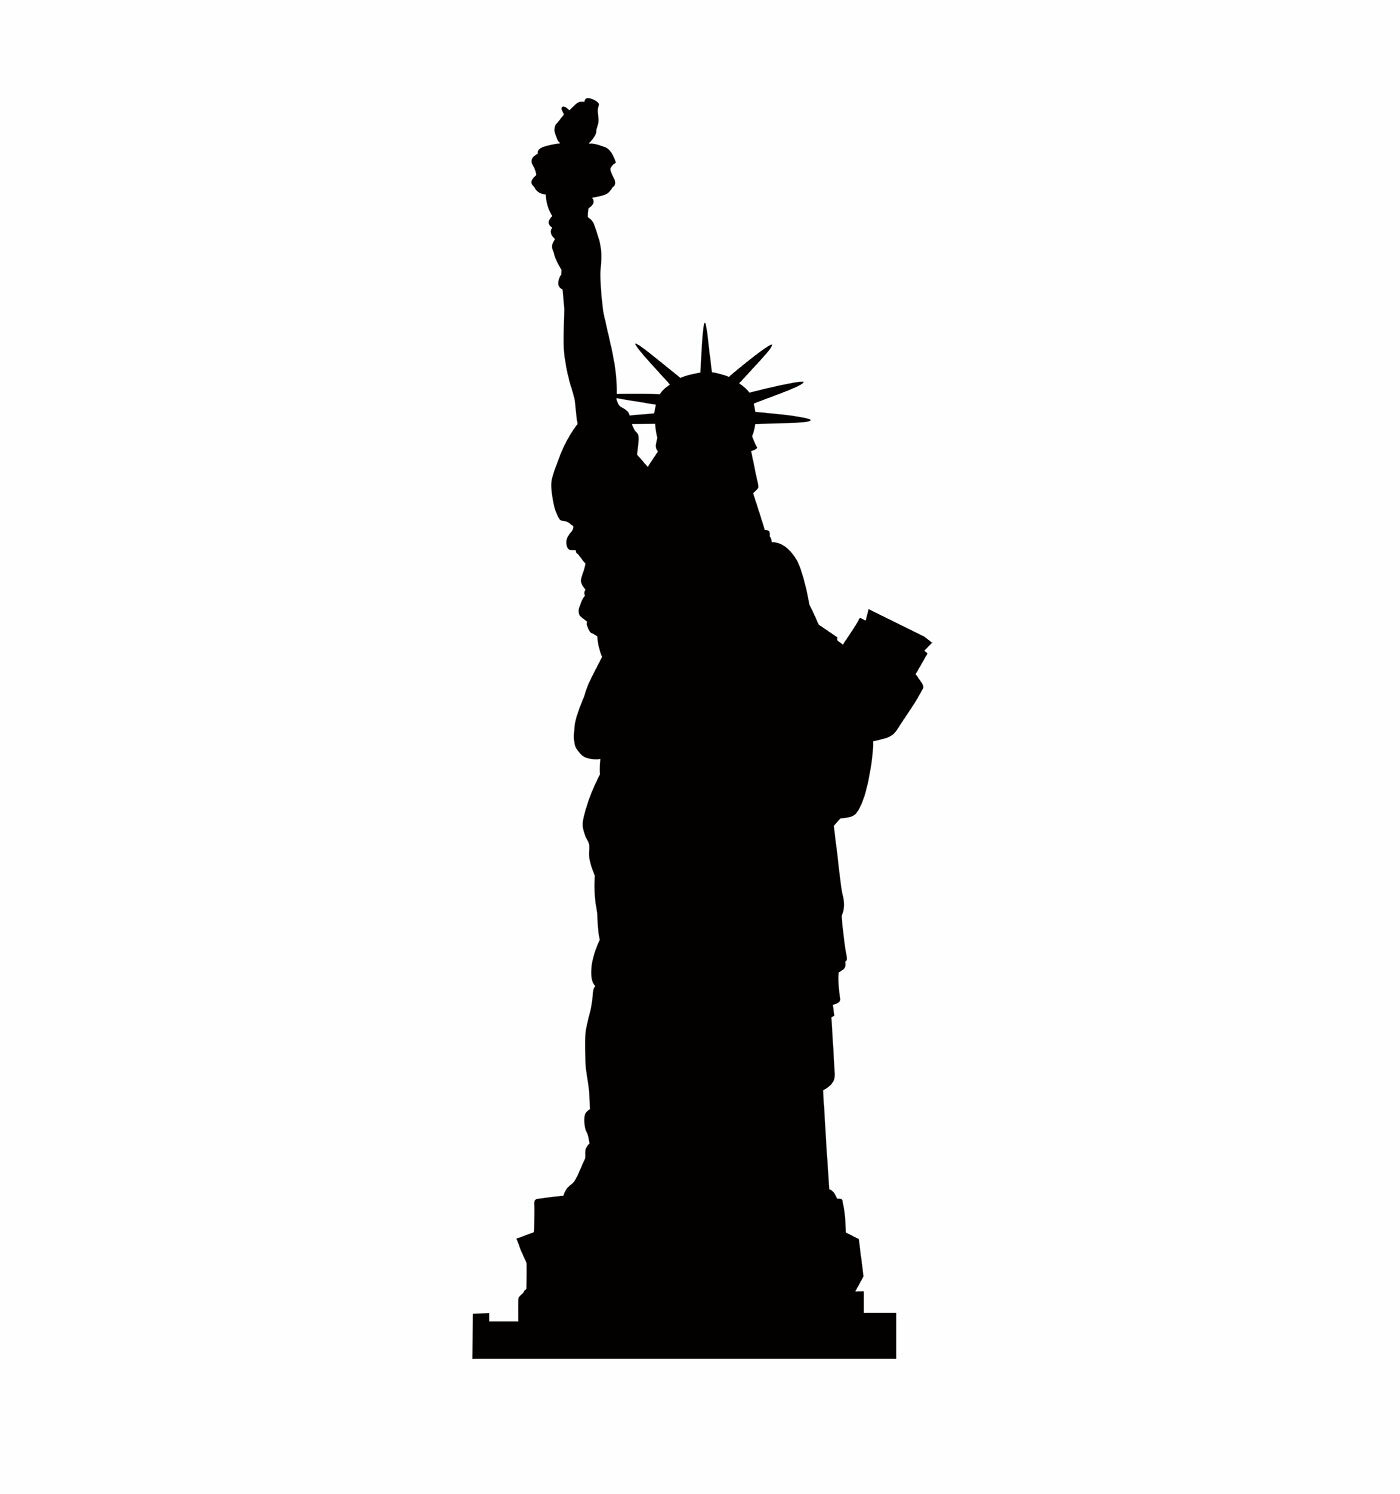 statue of liberty head silhouette